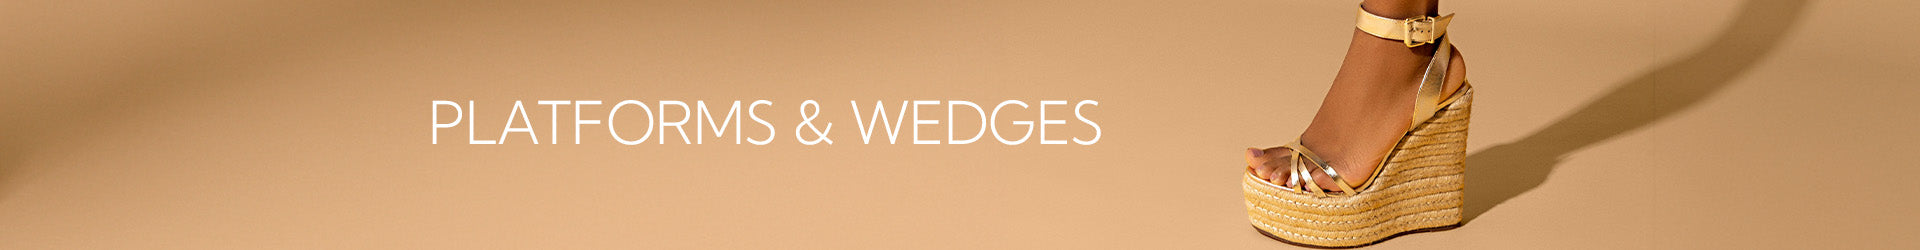 Platform & Wedge Styles